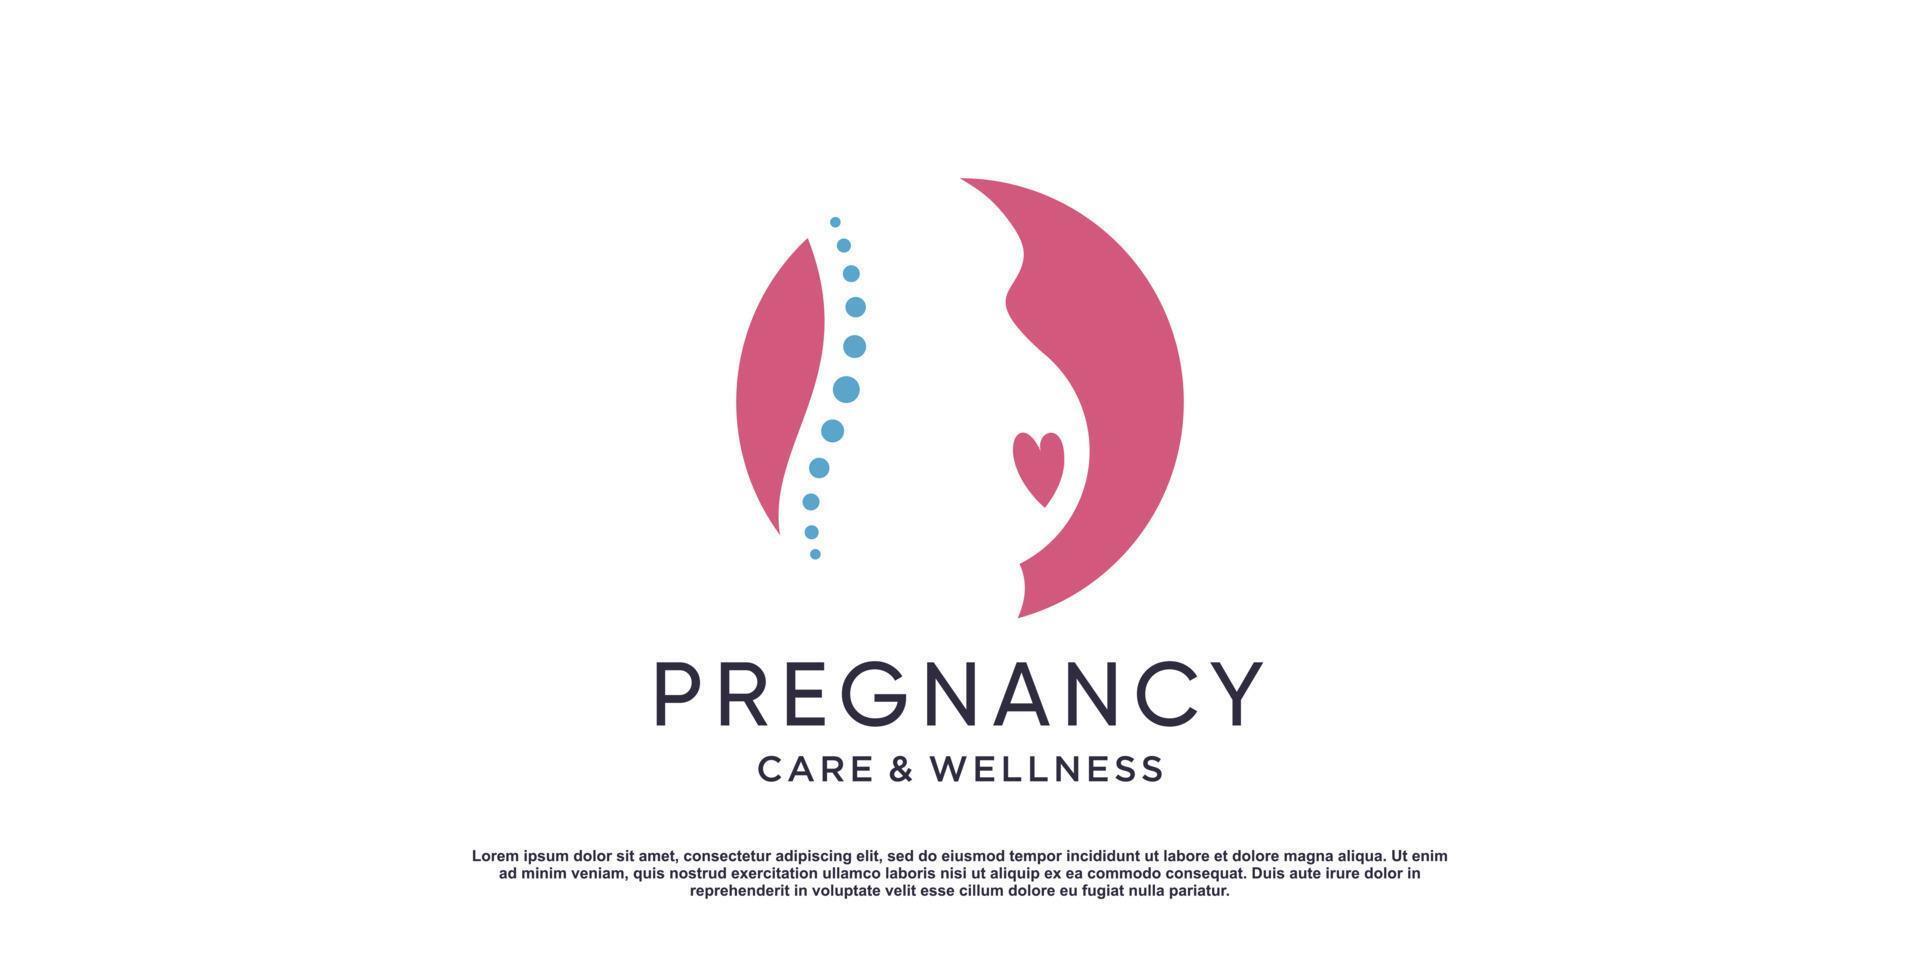 Pregnant logo concept with creative element style Premium Vector